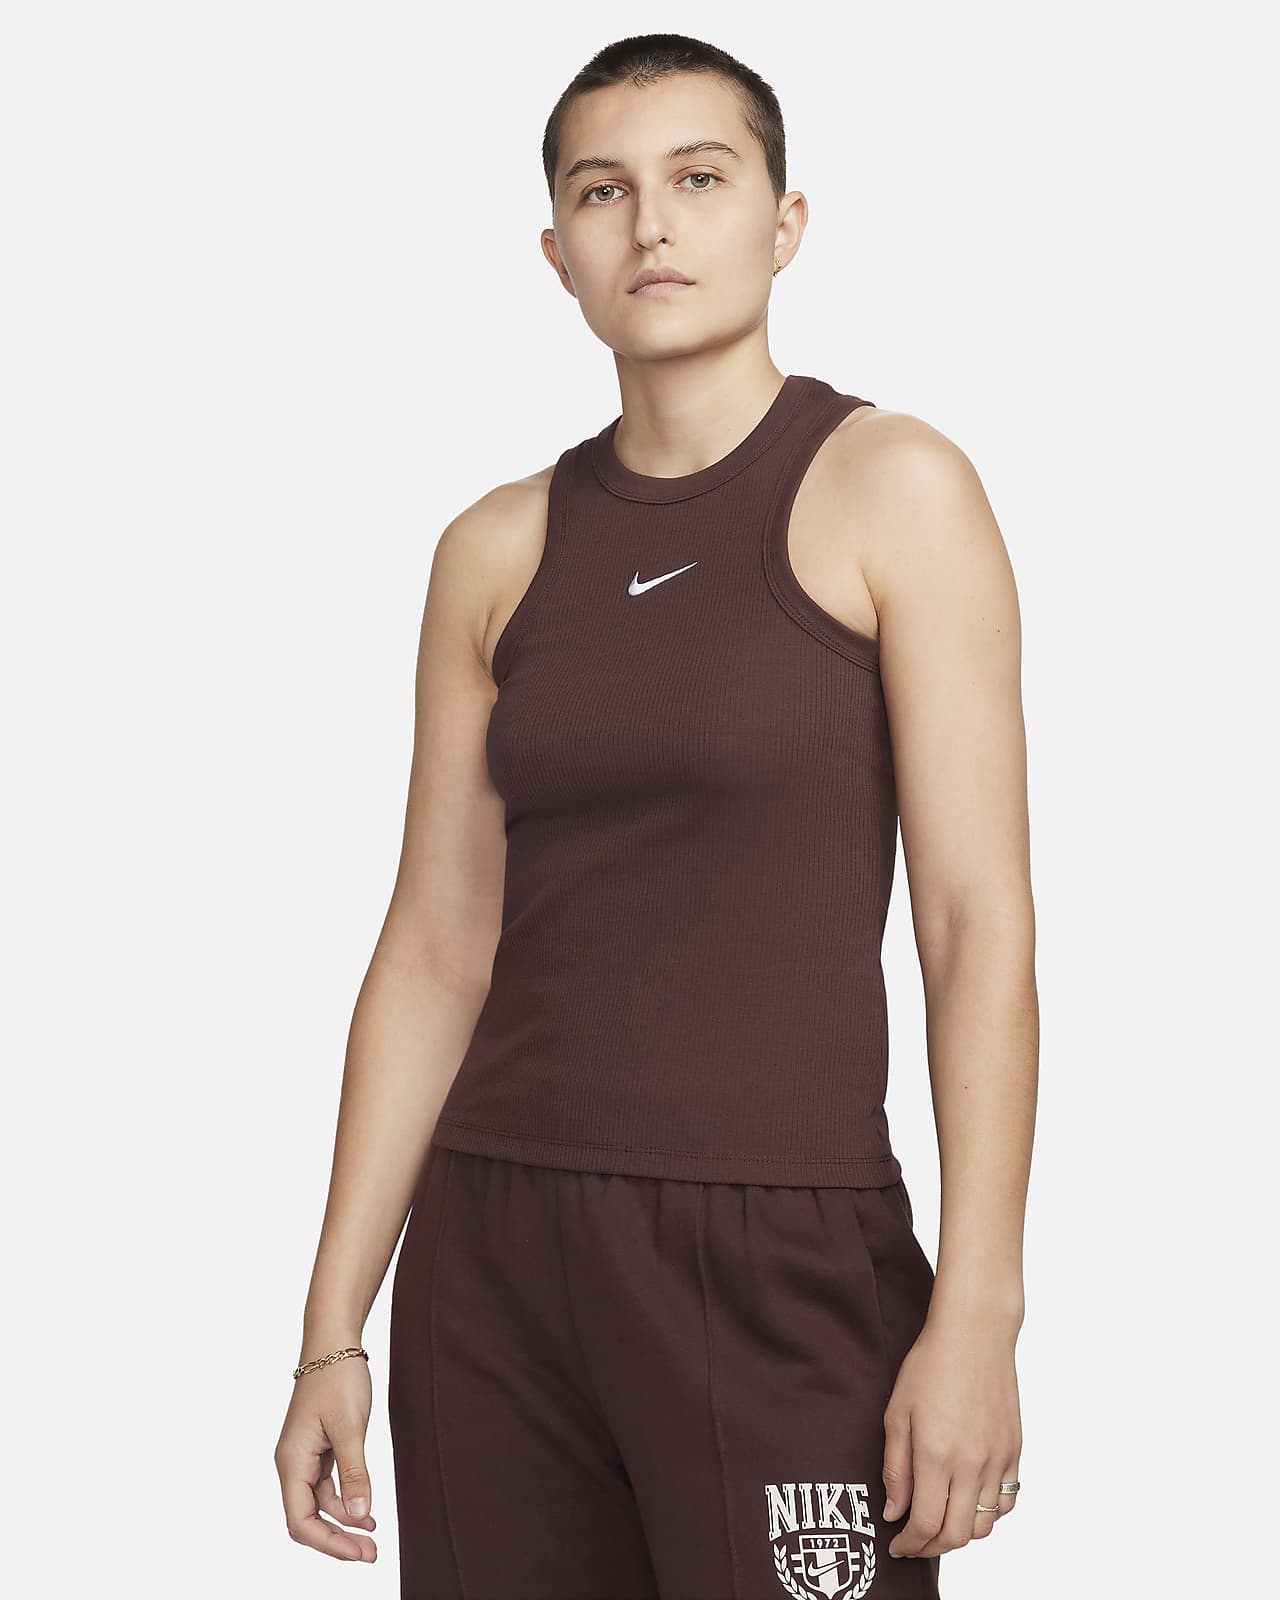 Débardeur Nike Sportswear pour femme